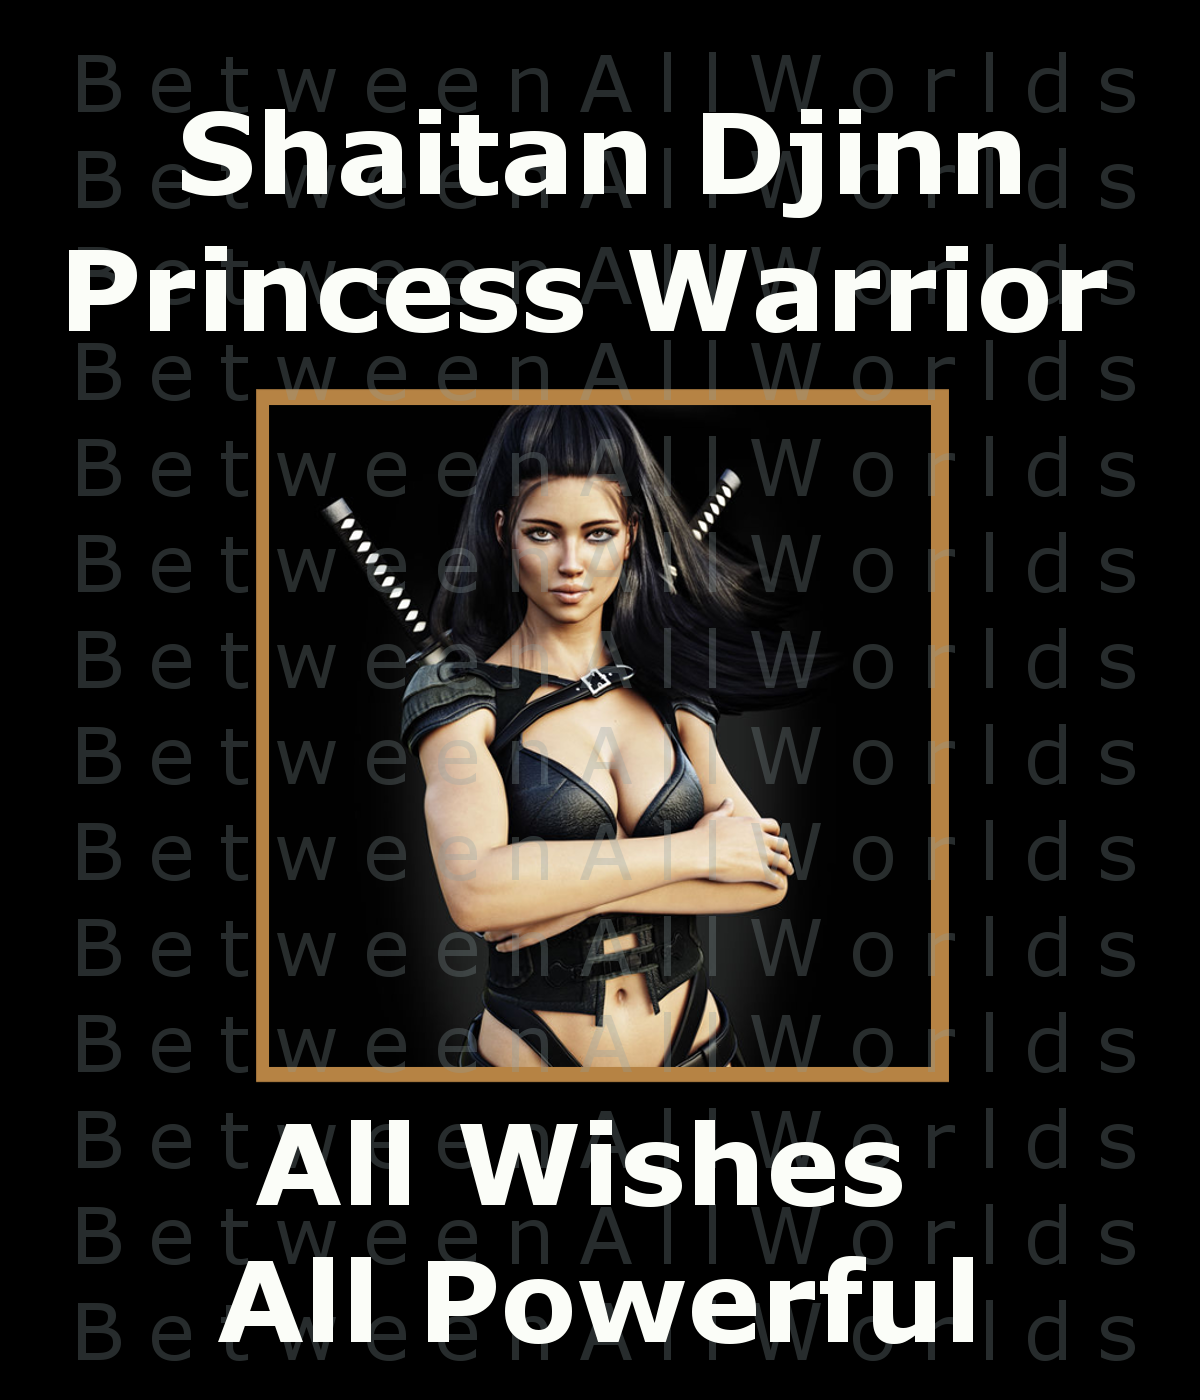 Sexy Female Shaitan Djinn Warrior Princess And Army + Free Love & Wealth Spell - $95.00